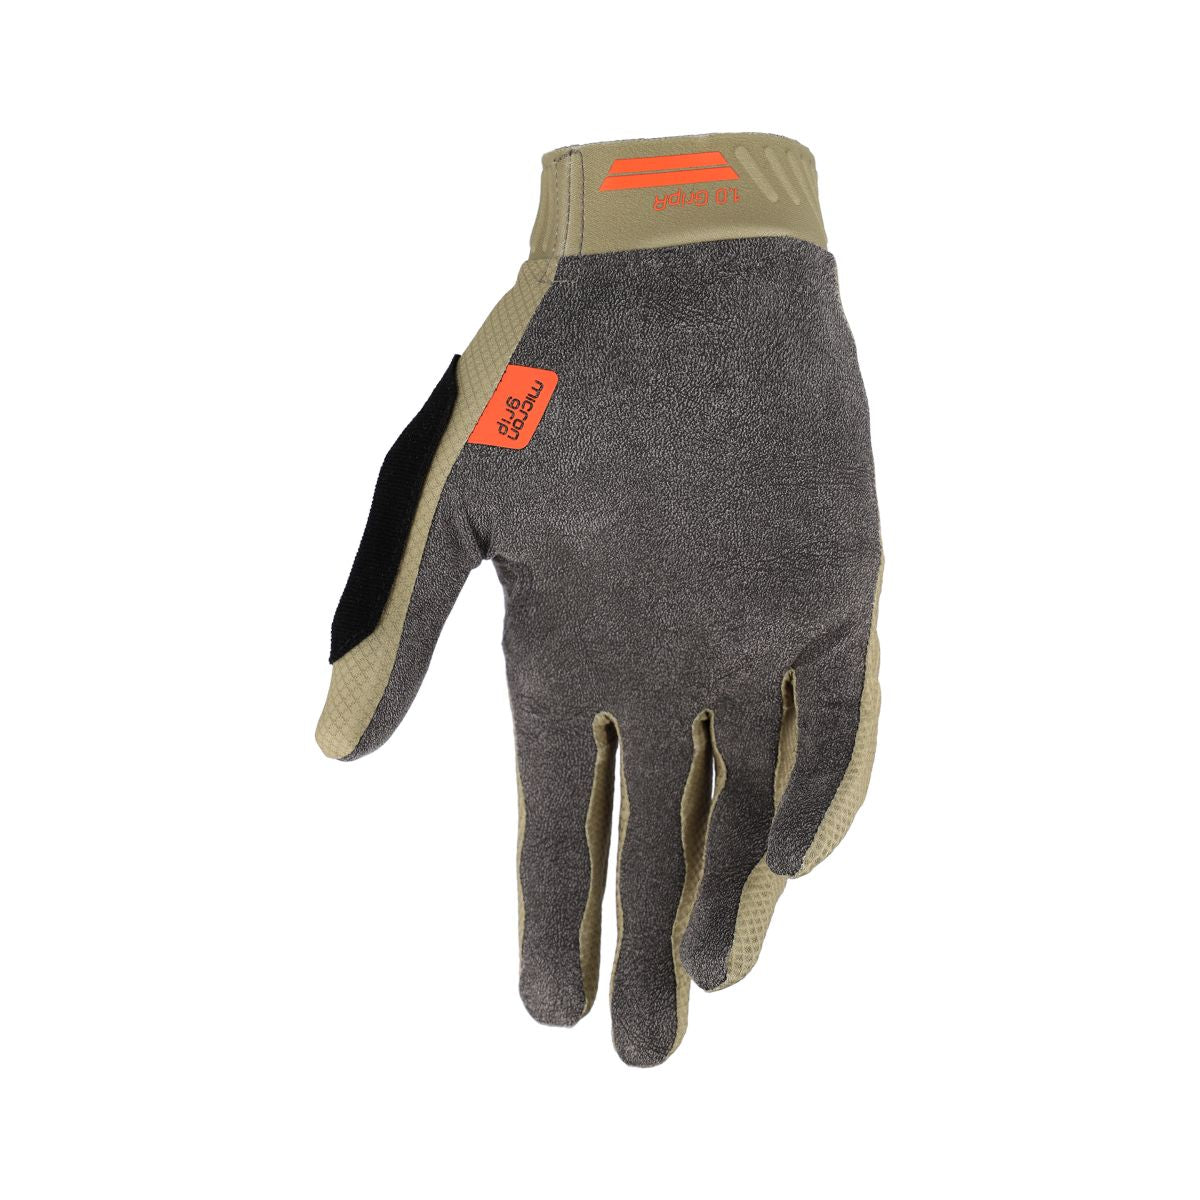 Leatt Protection Glove Mtb 1.0 Gripr Dune Xl in Dune